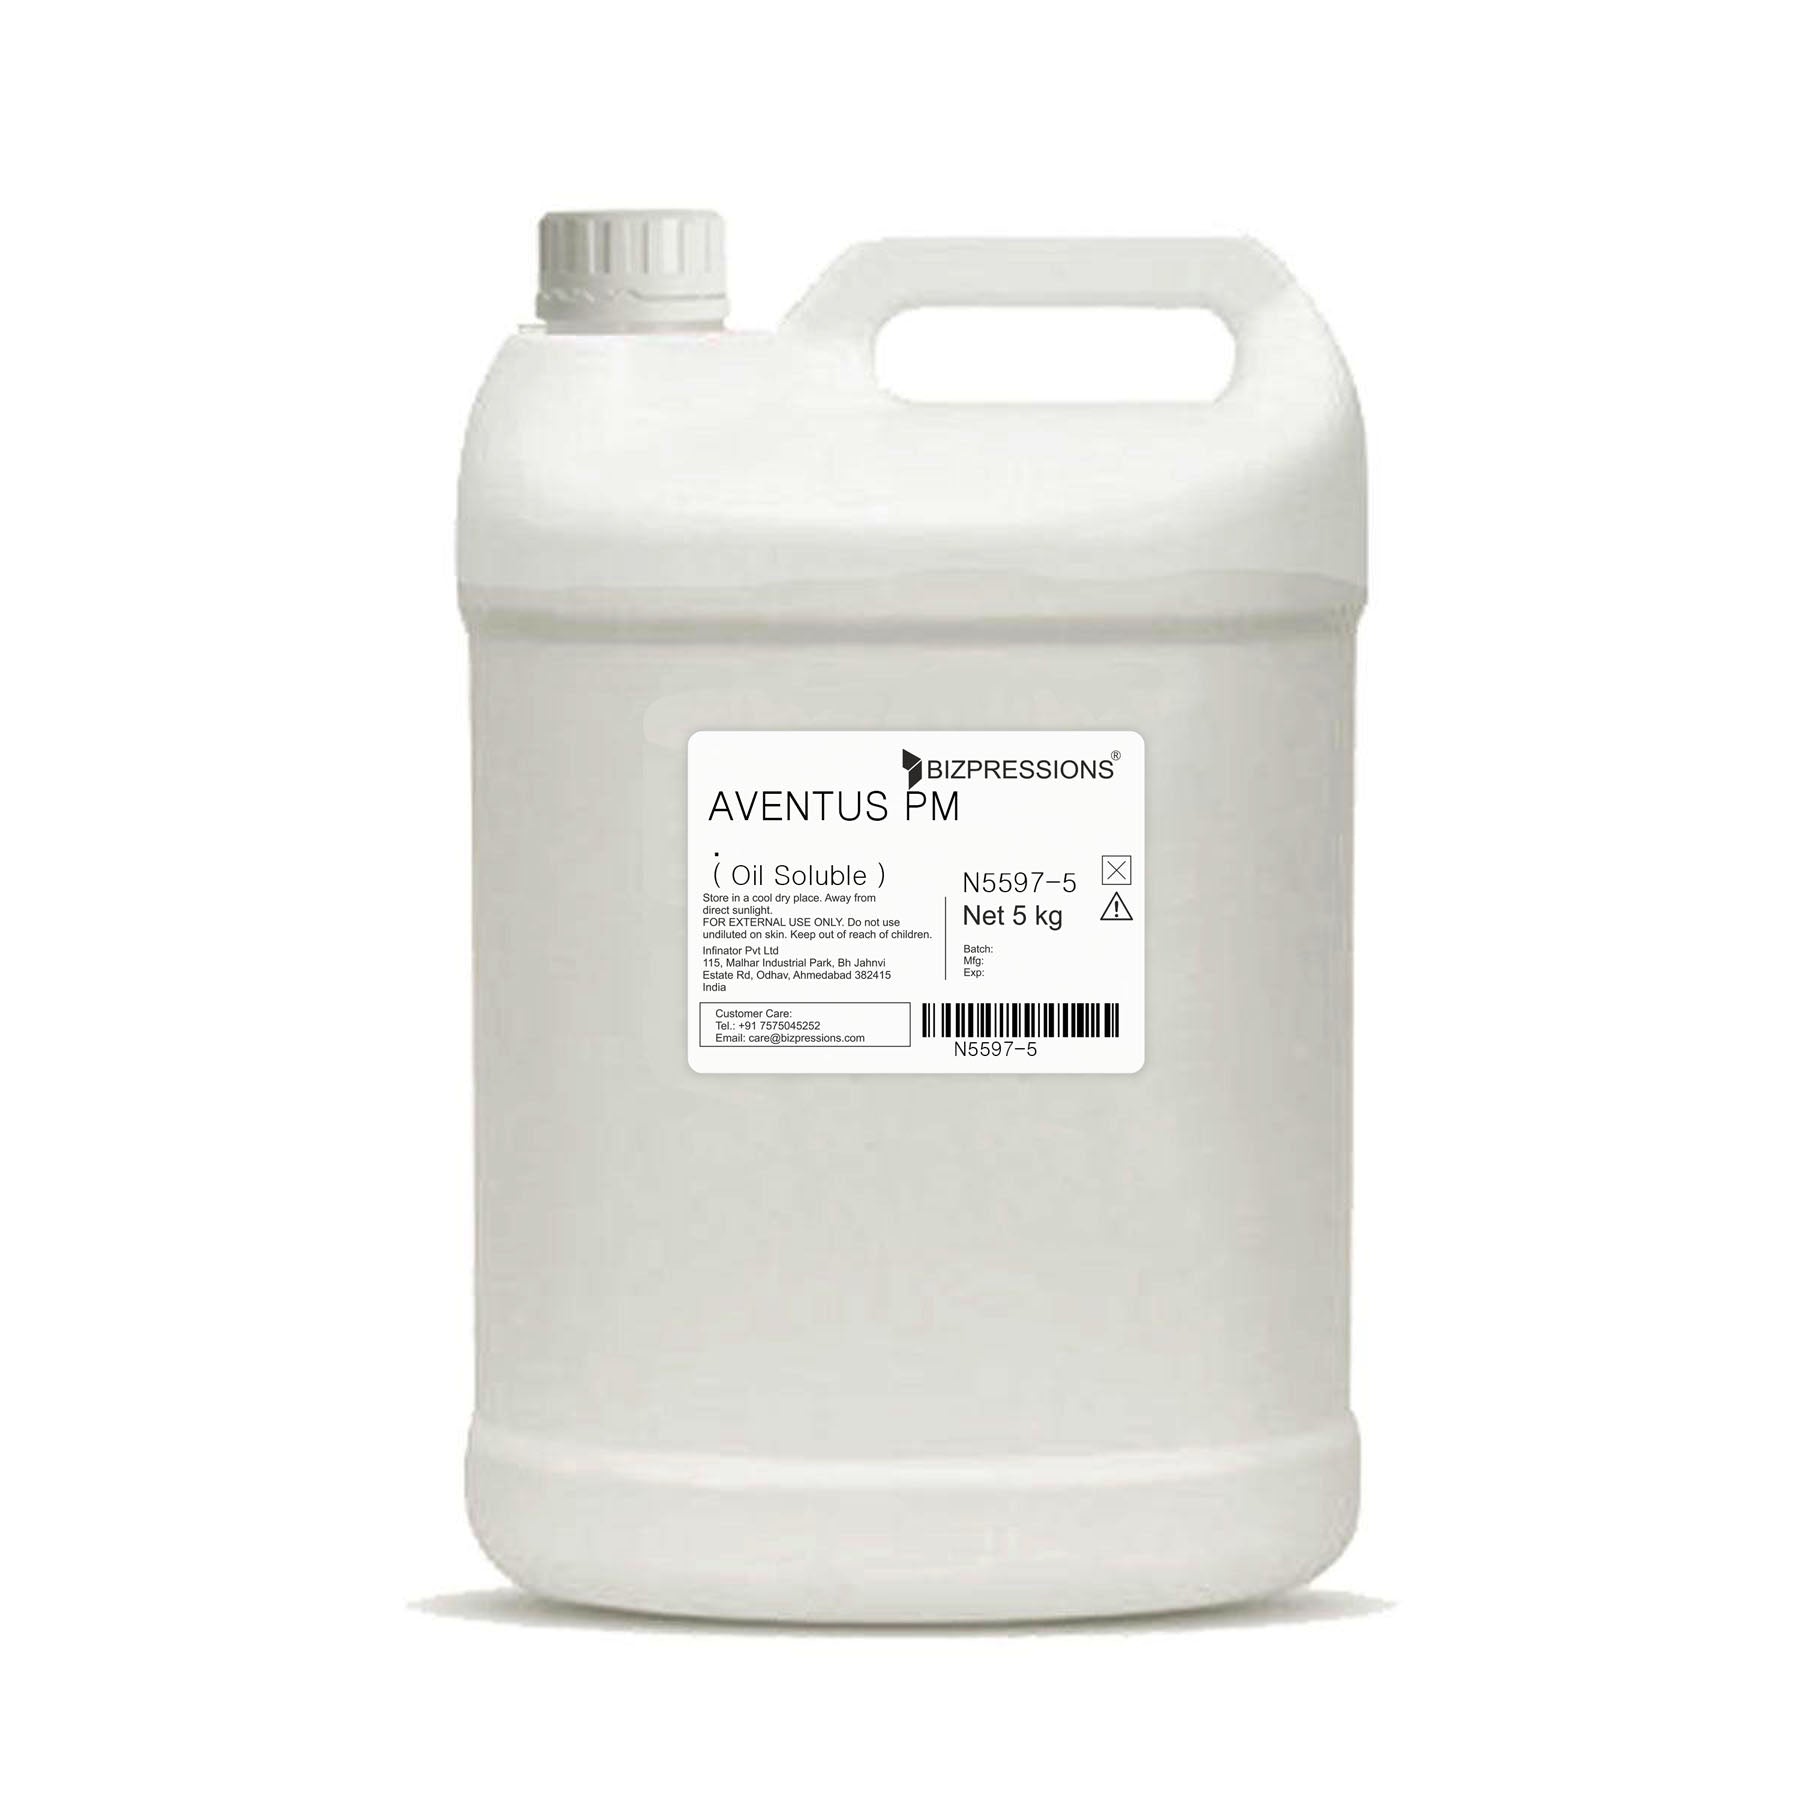 AVENTUS PM - Fragrance ( Oil Soluble ) - 5 kg